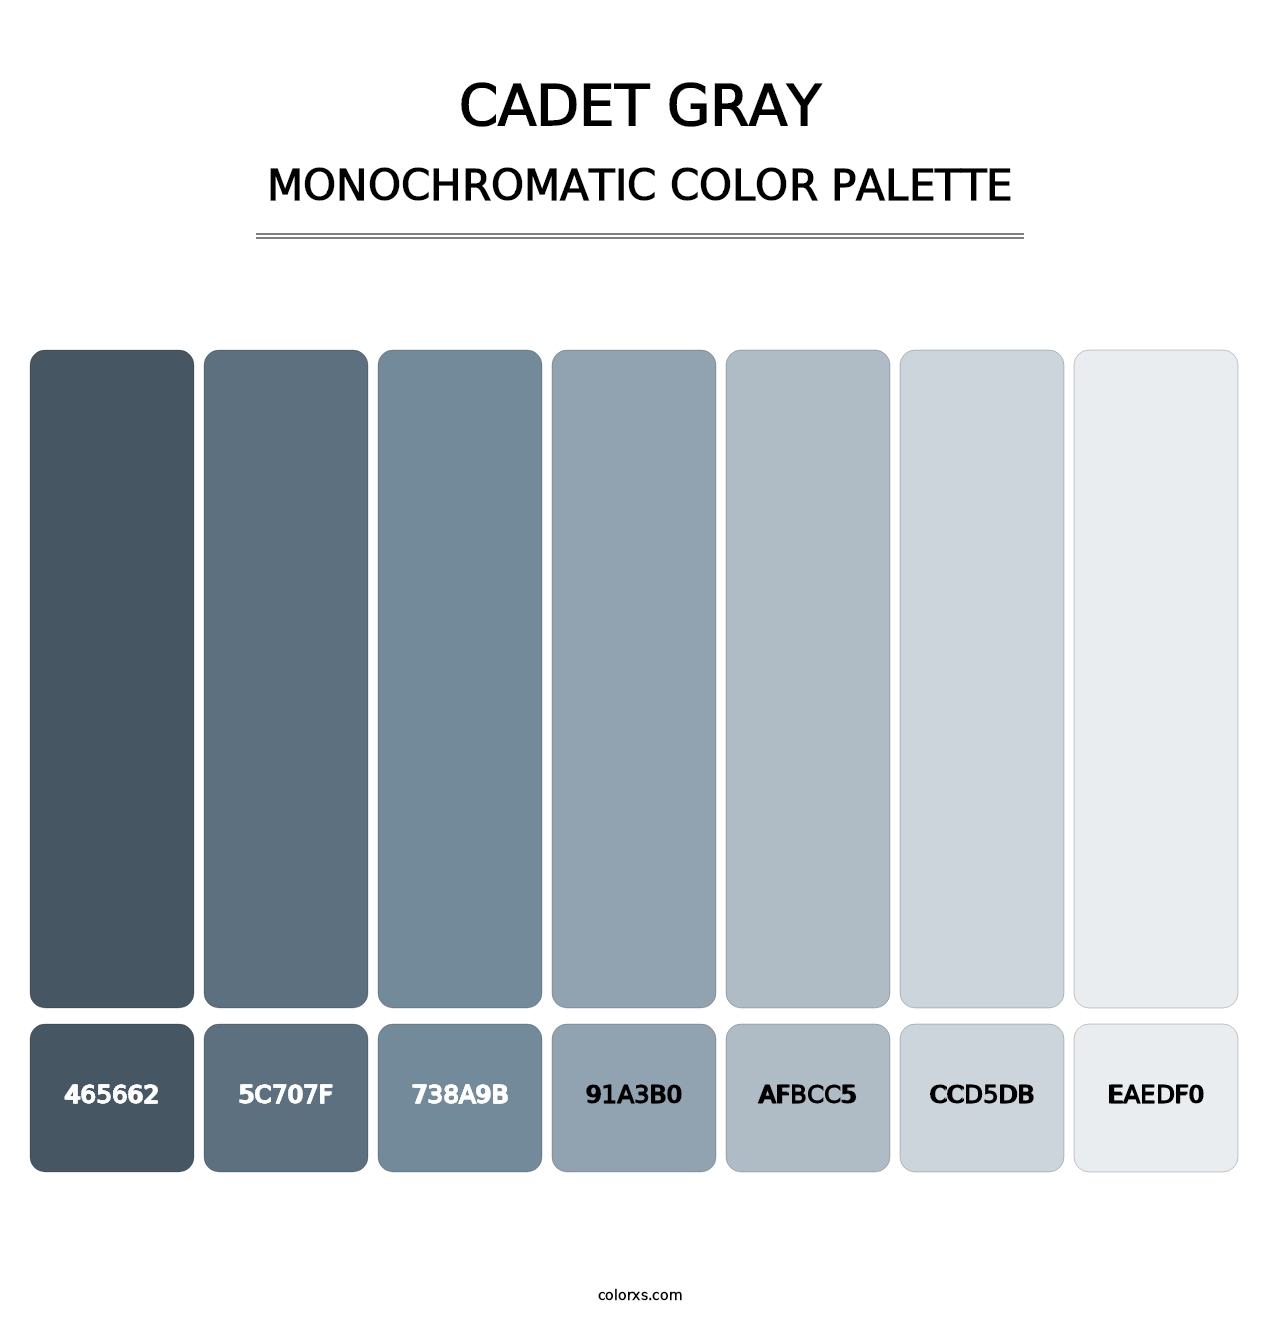 Cadet Gray - Monochromatic Color Palette